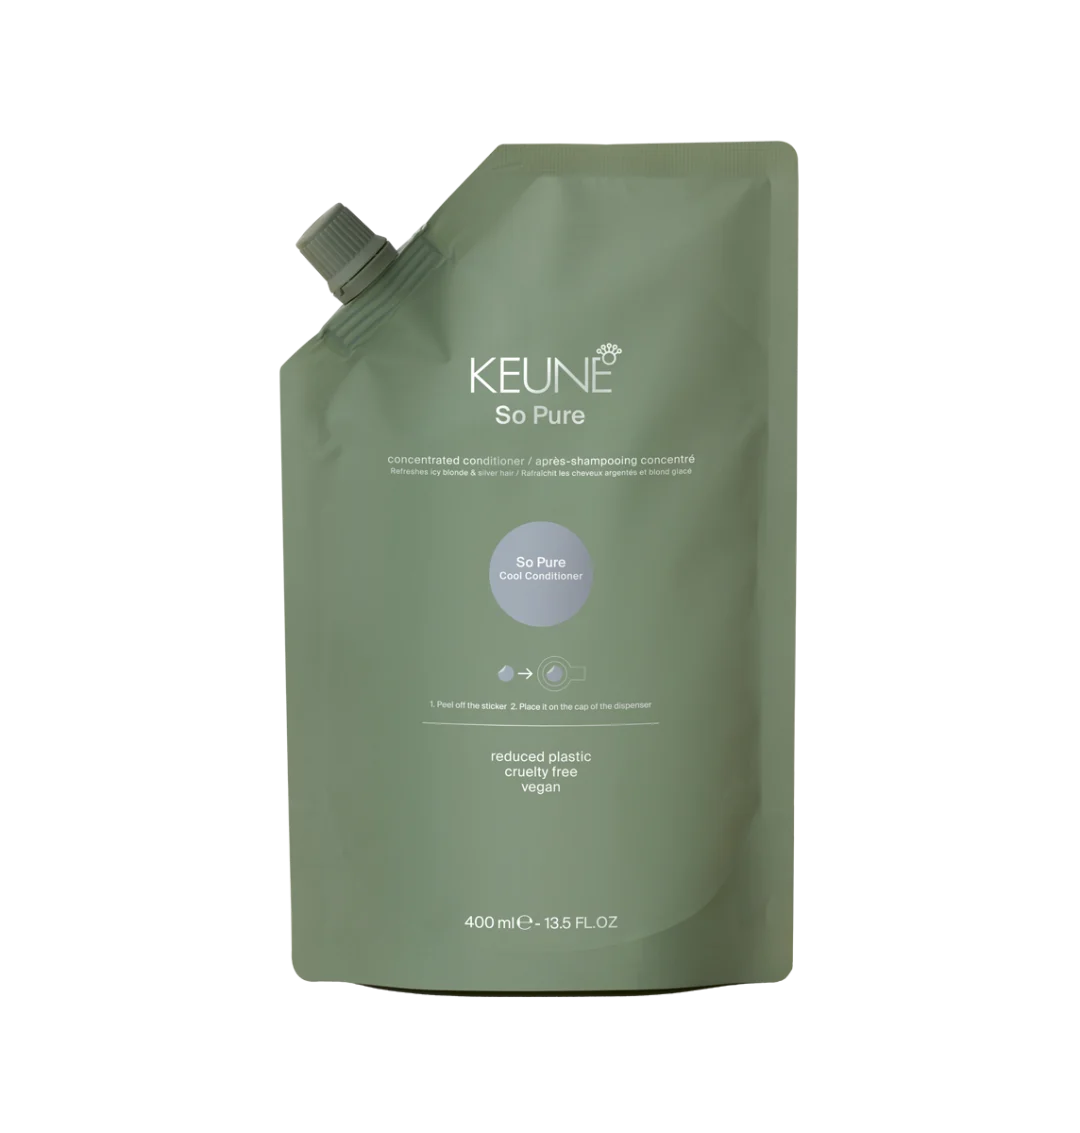 Keune SO PURE COOL CONDITIONER REFILL (400ml) - Hair Care